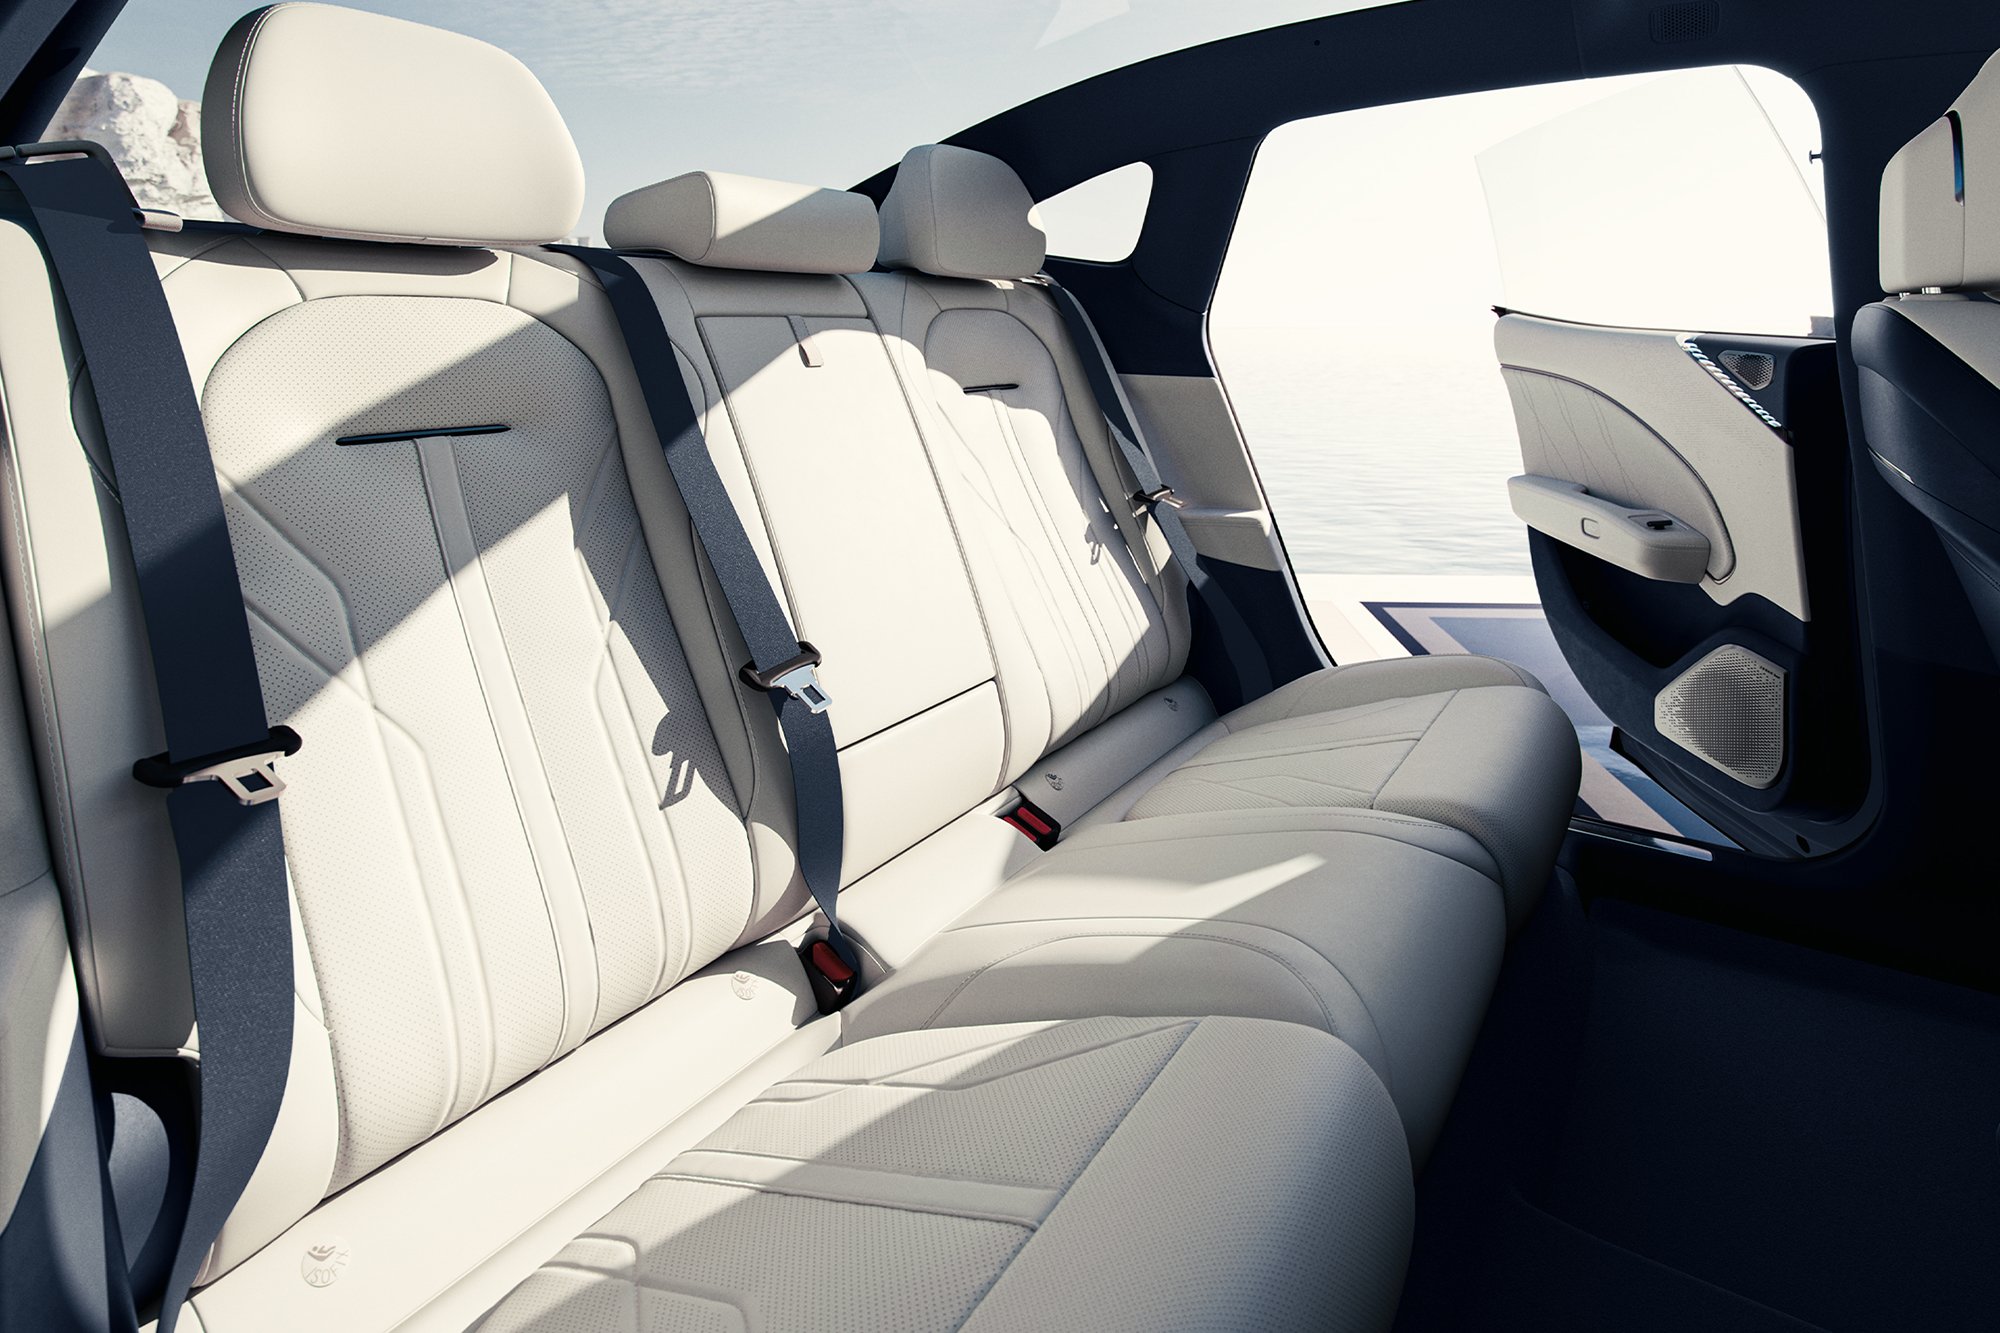 The interior design of the new design language "Hidden Energy" of the all-electric ZEEKR 007 sedan